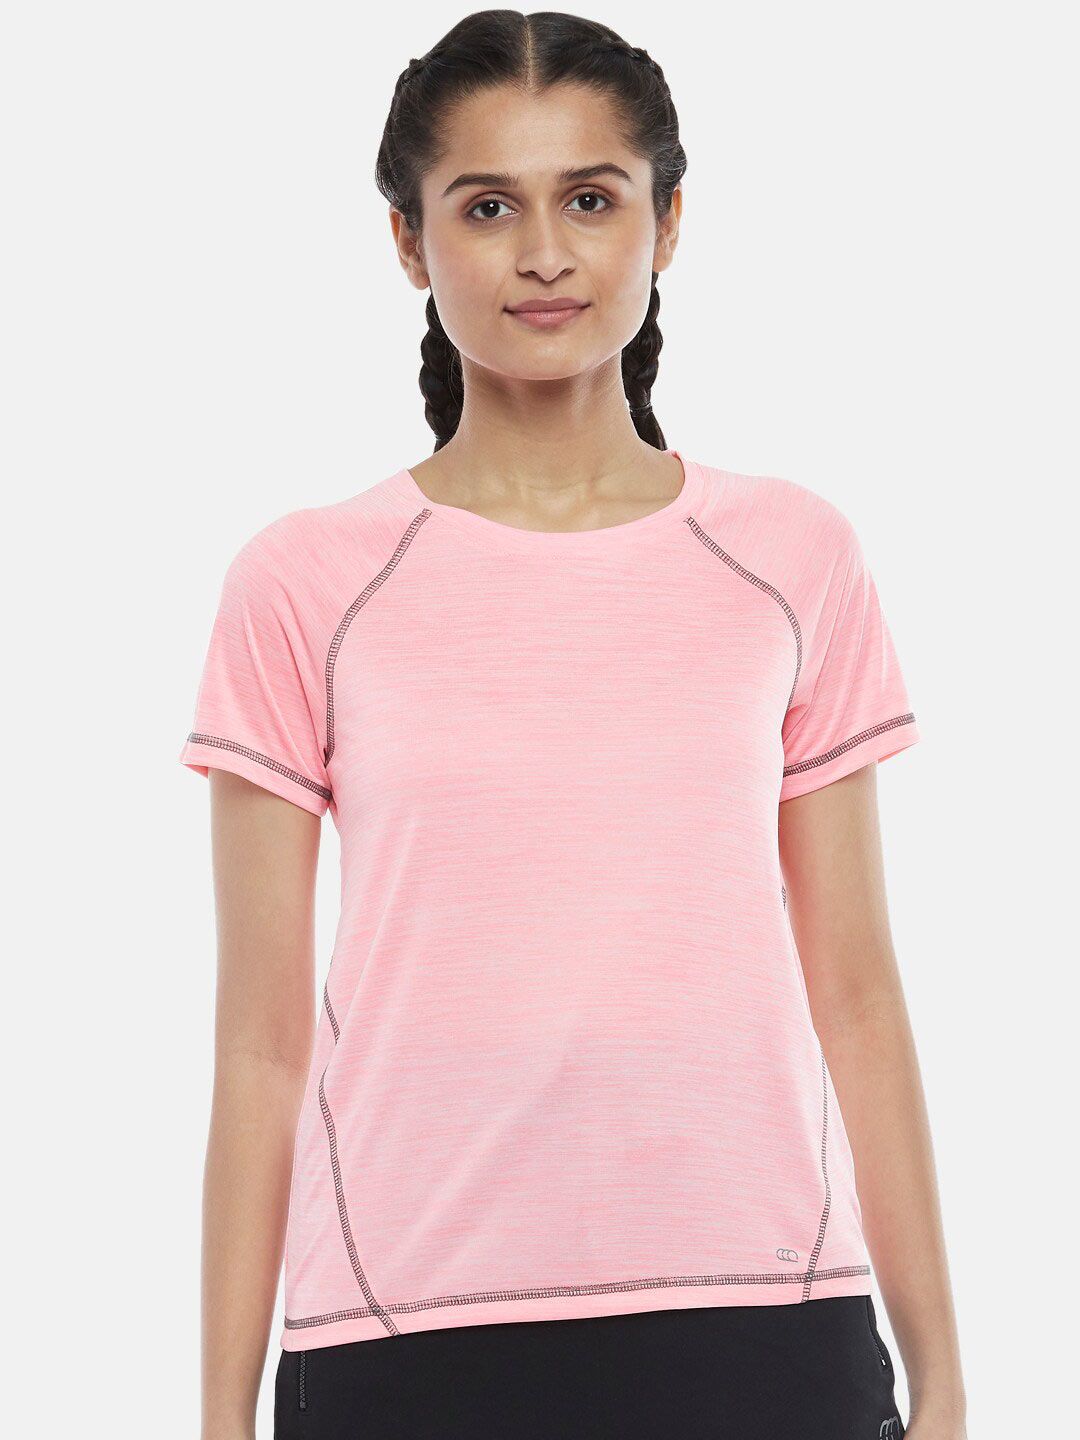 Ajile by Pantaloons Women Pink T-shirt Price in India